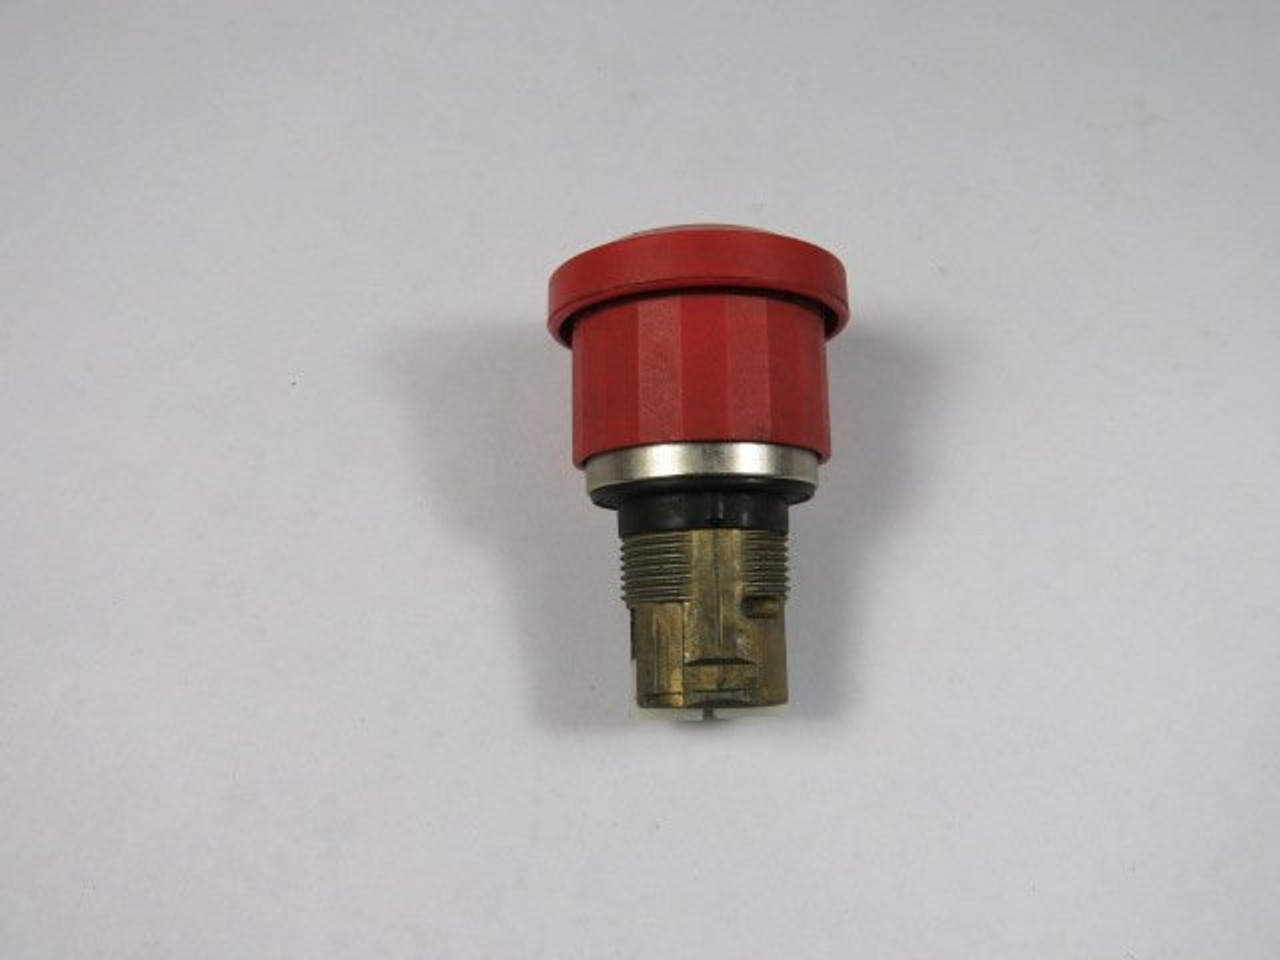 Allen-Bradley 800EM-MP24 Push-Pull Red Mushroom Push Button Operator USED